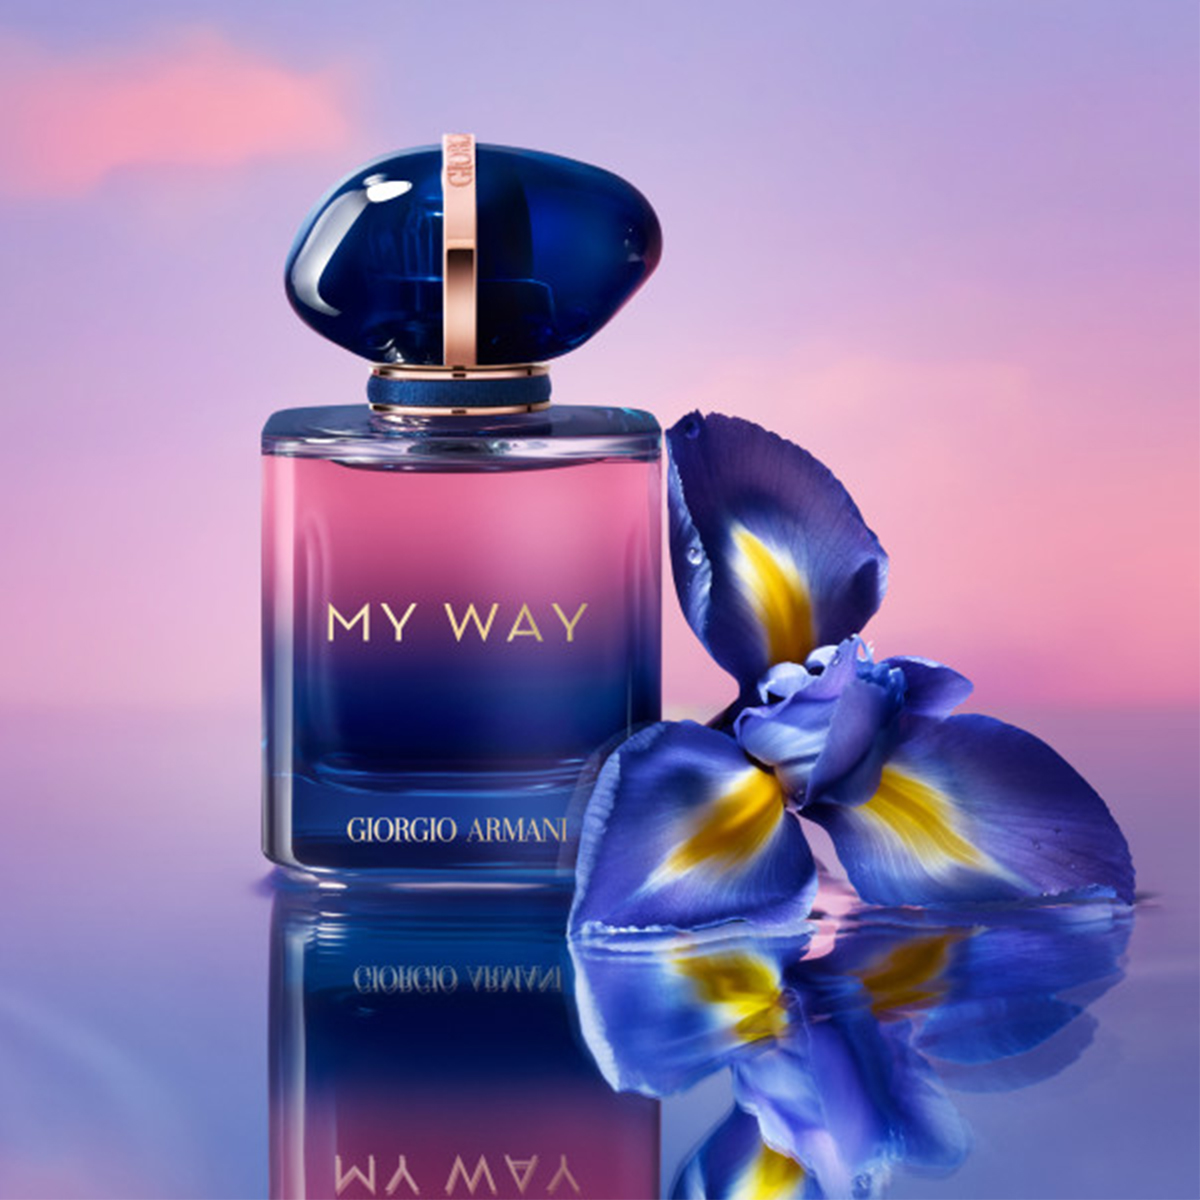 Giorgio Armani - My Way Parfum Refill 